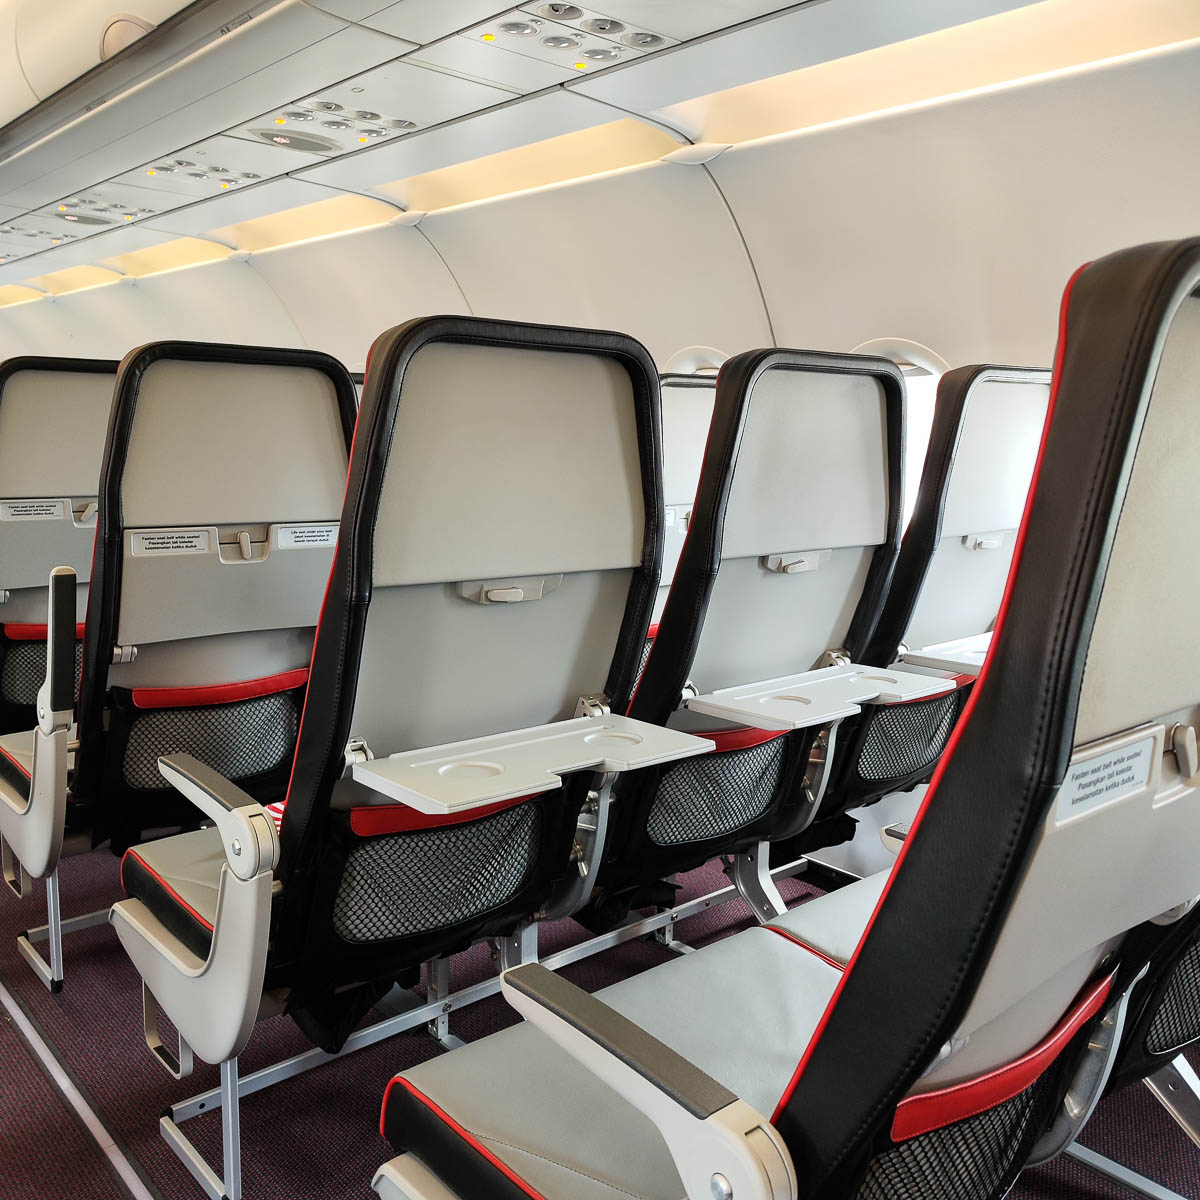 ergonomic aircraft seats